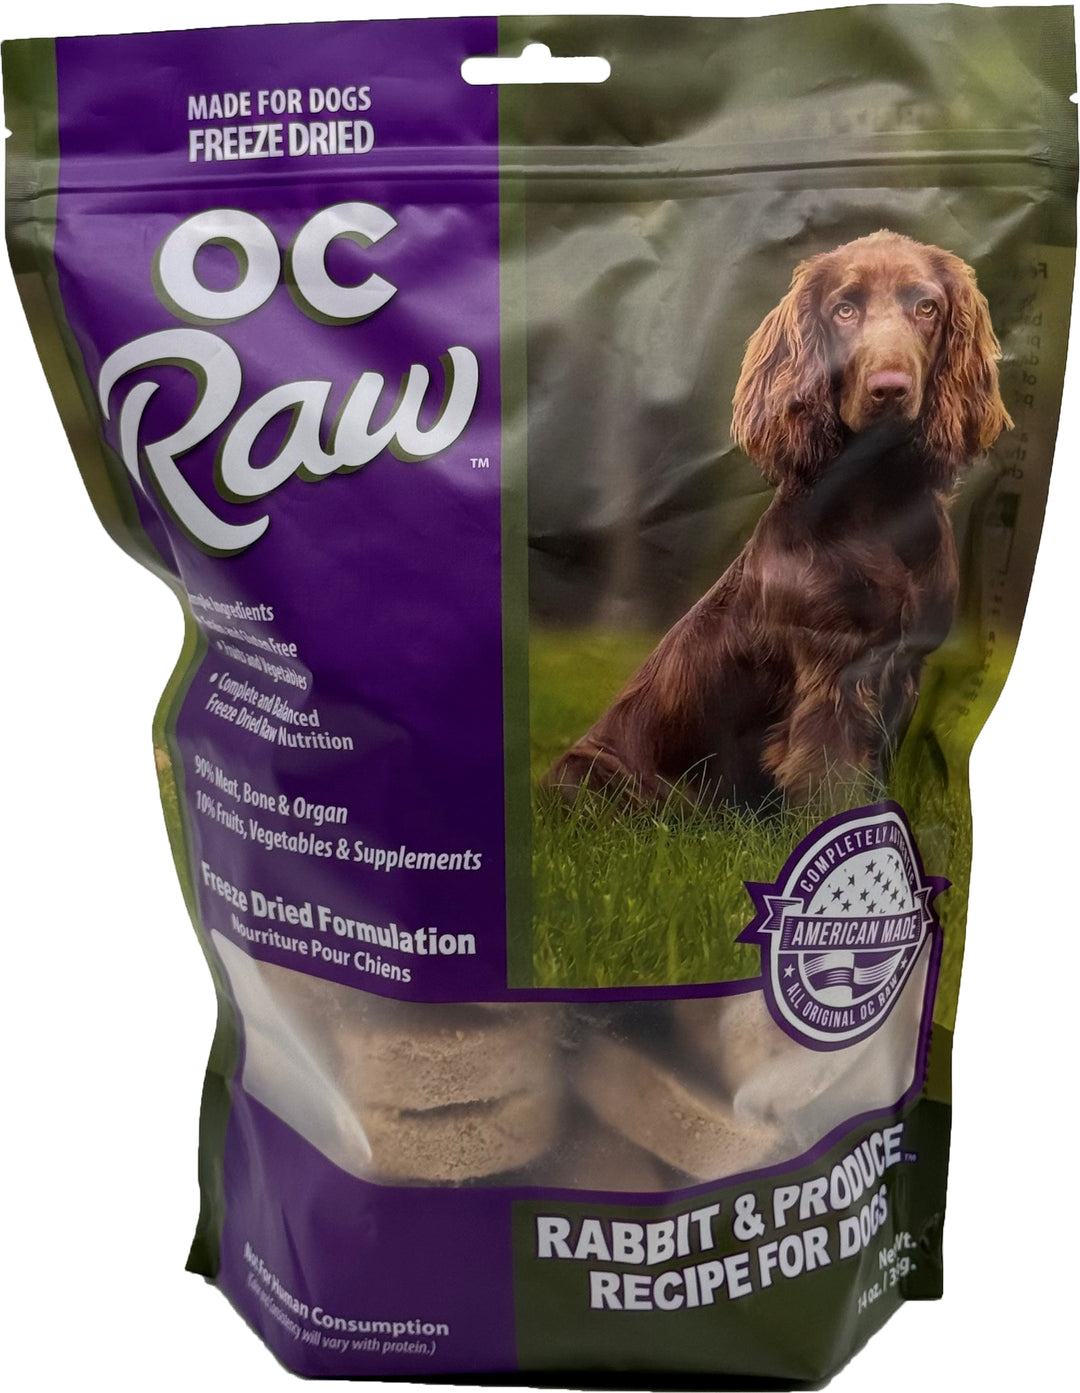 OC Raw - Freeze Dried Rabbit & Produce Sliders (14 oz / 397g)